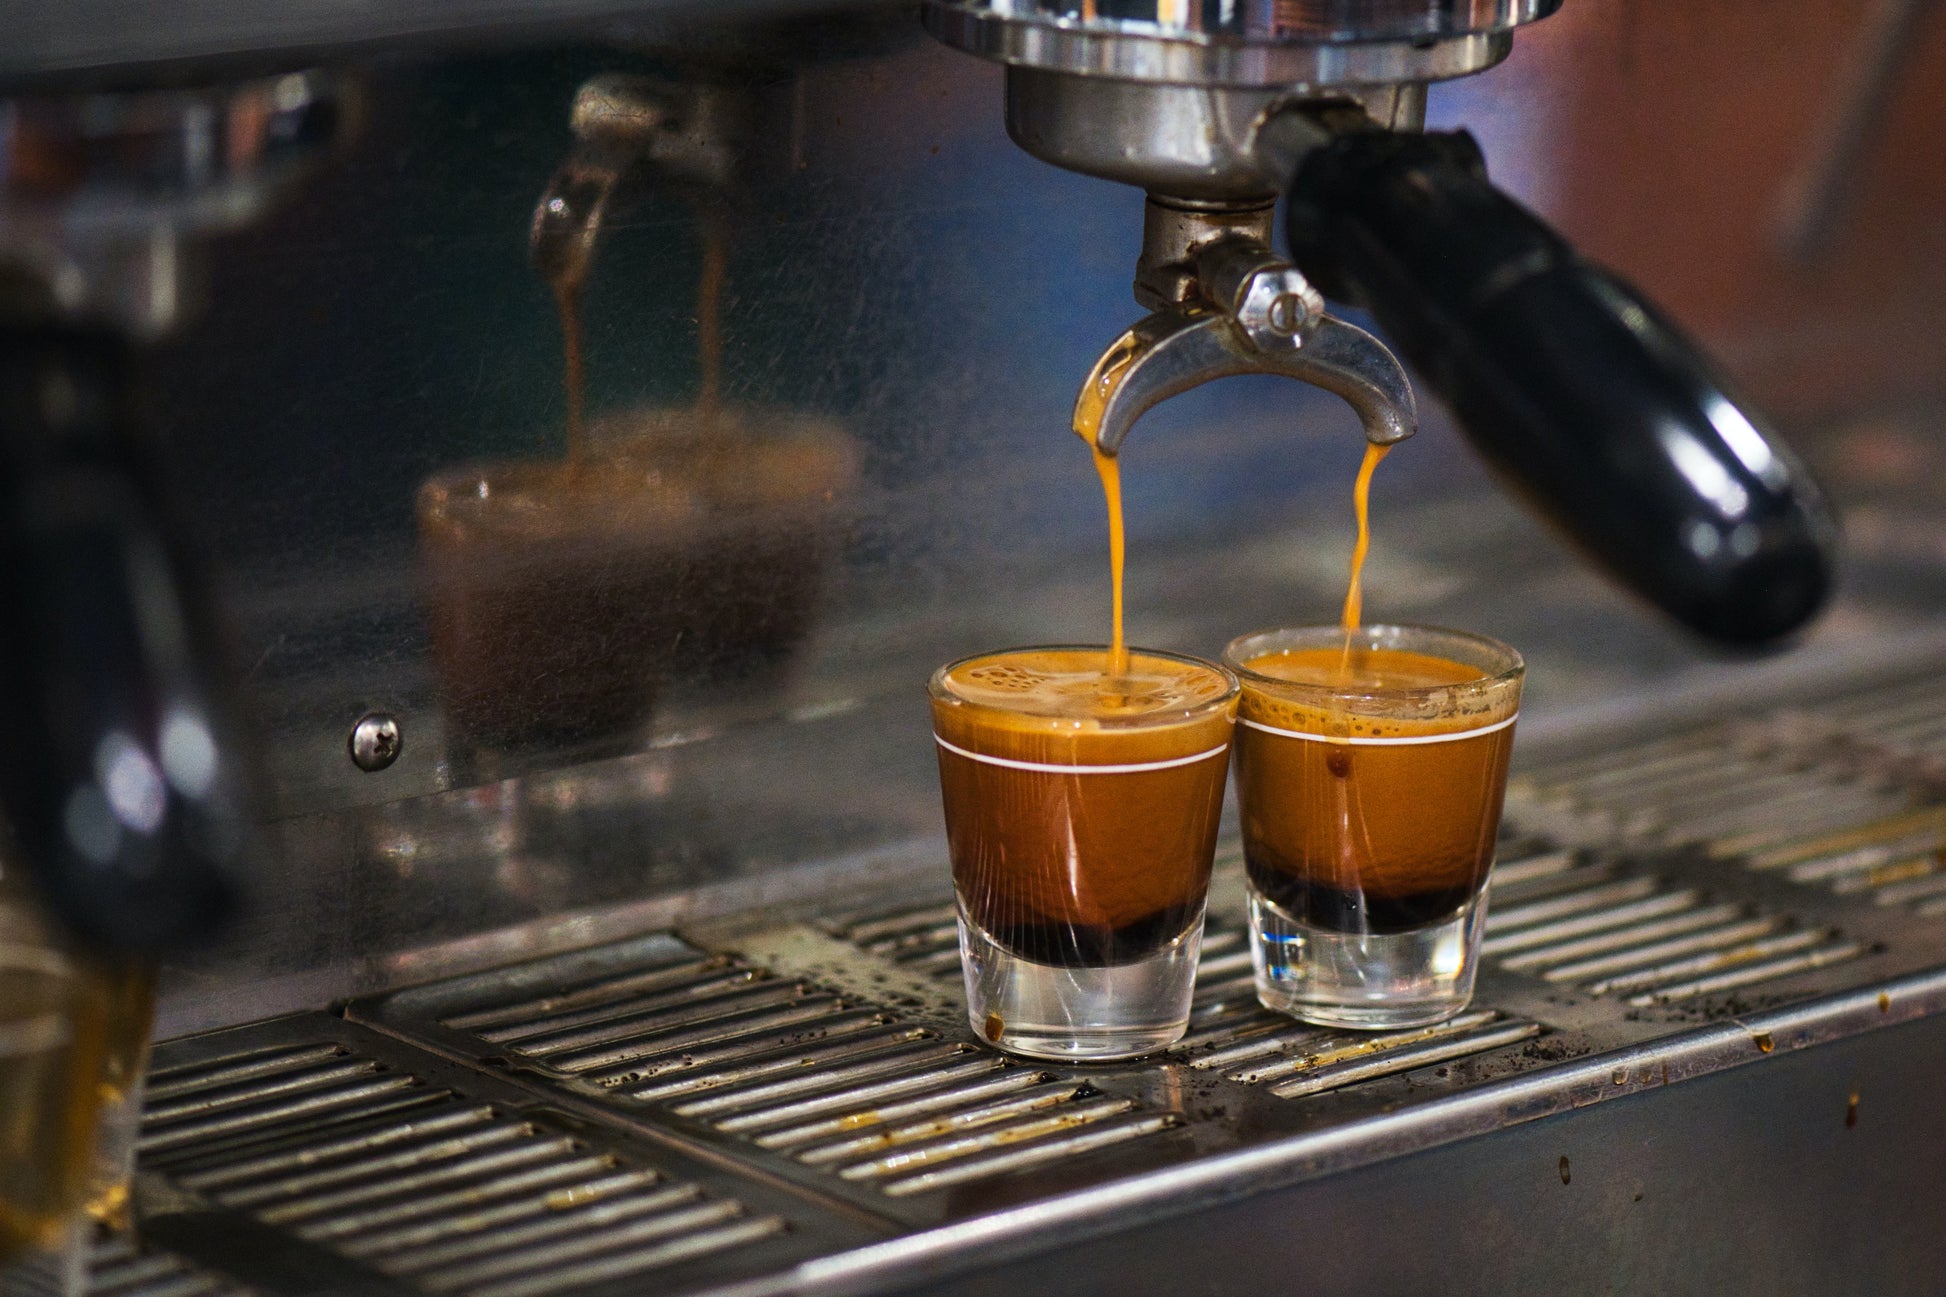 Blonde Espresso Light Roast Coffee being brewed from Coffee Machine